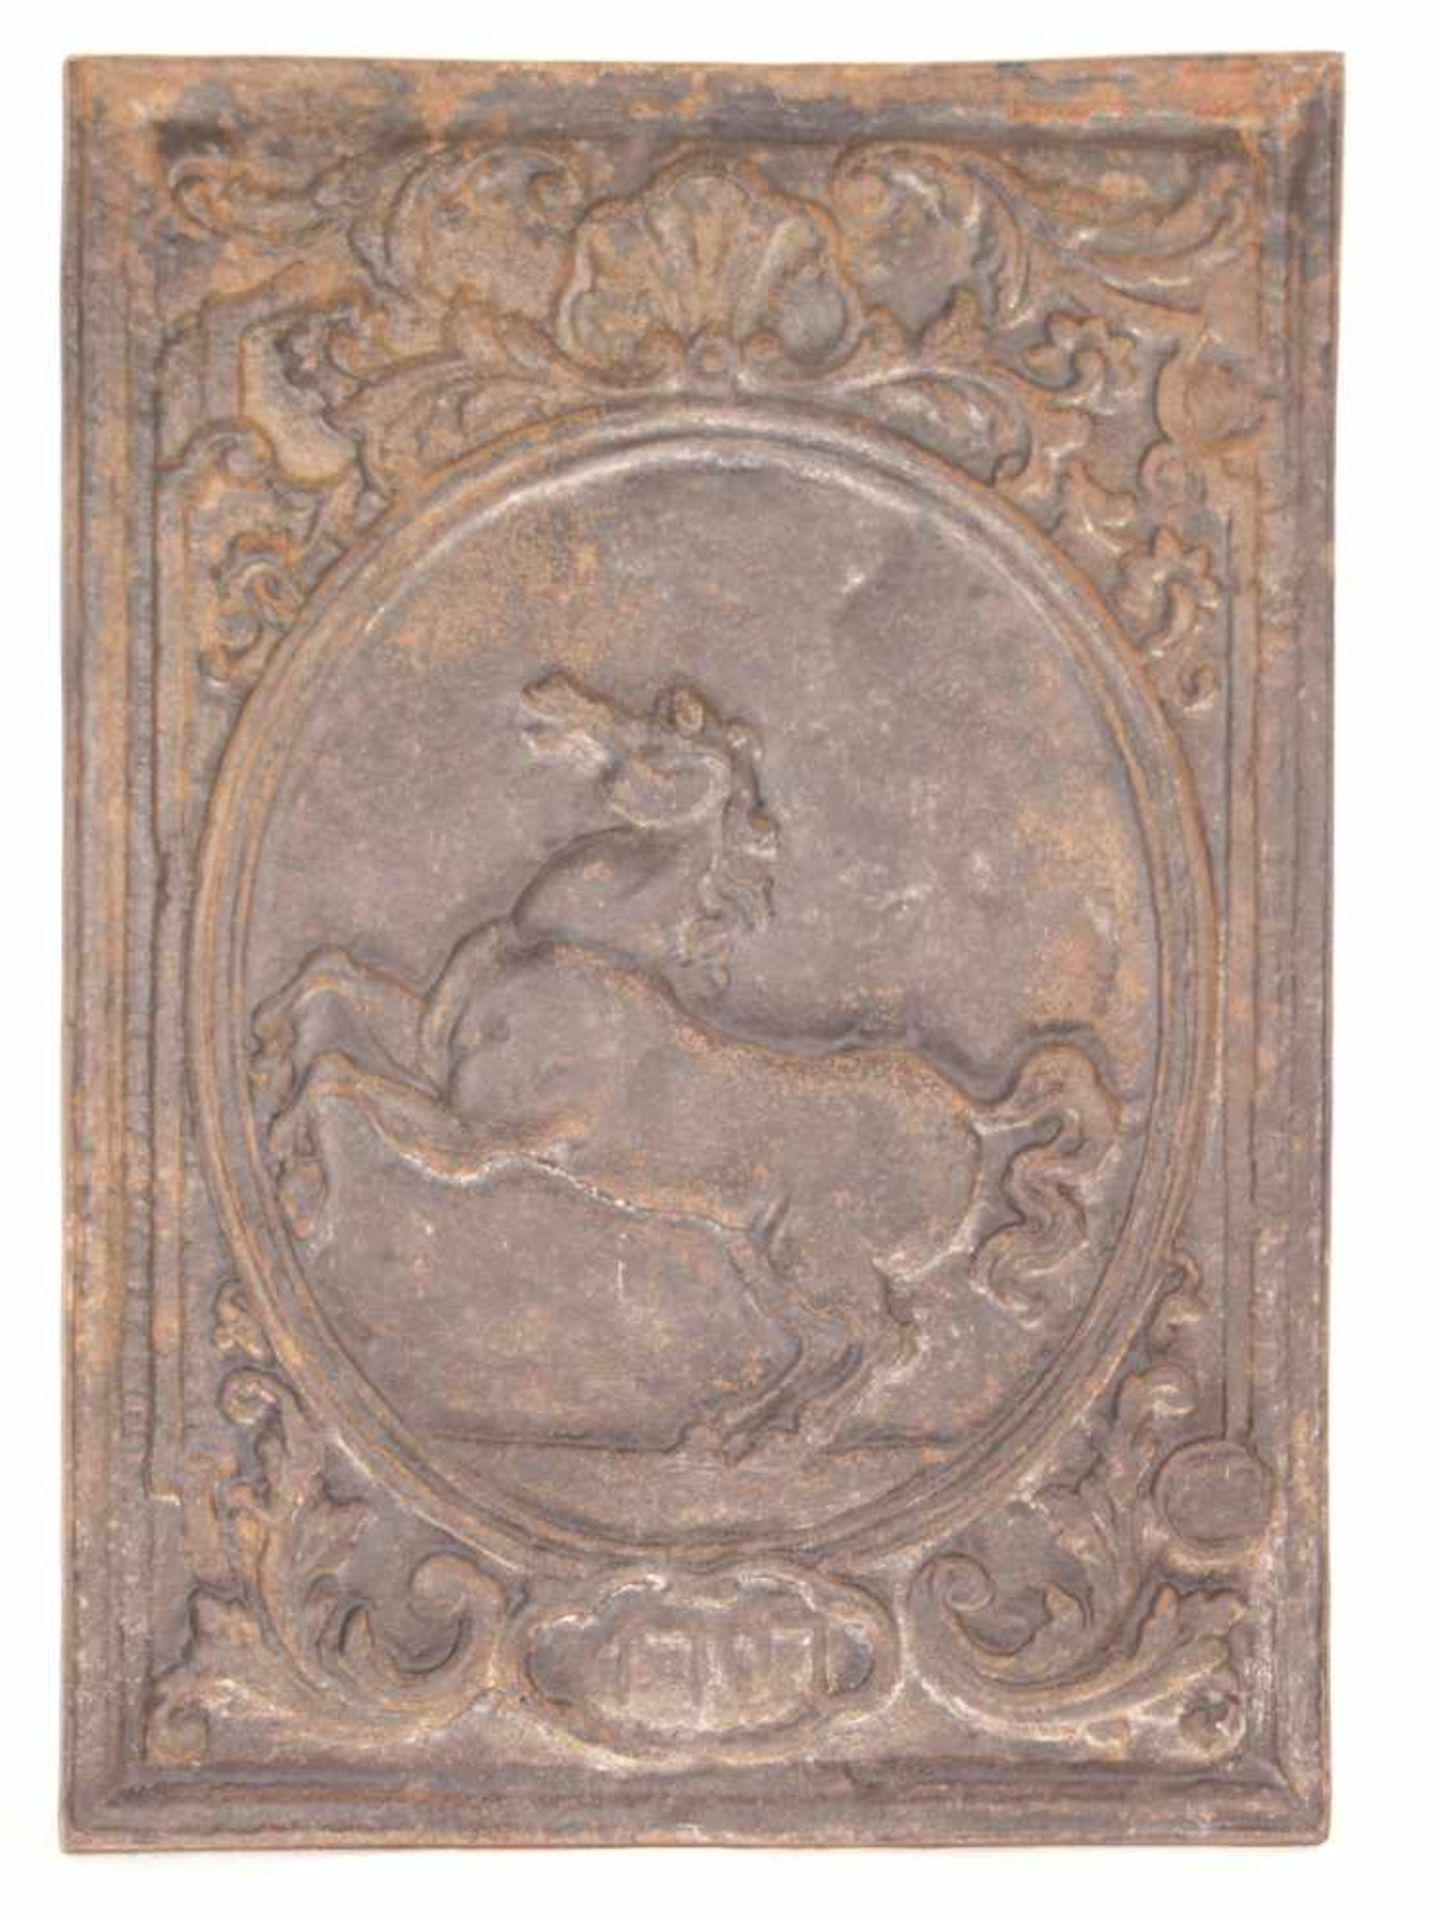 Barocke Kaminplatte - Eisenguss, in der Kartusche datiert "1707", rechteckige schwere Kamin- /